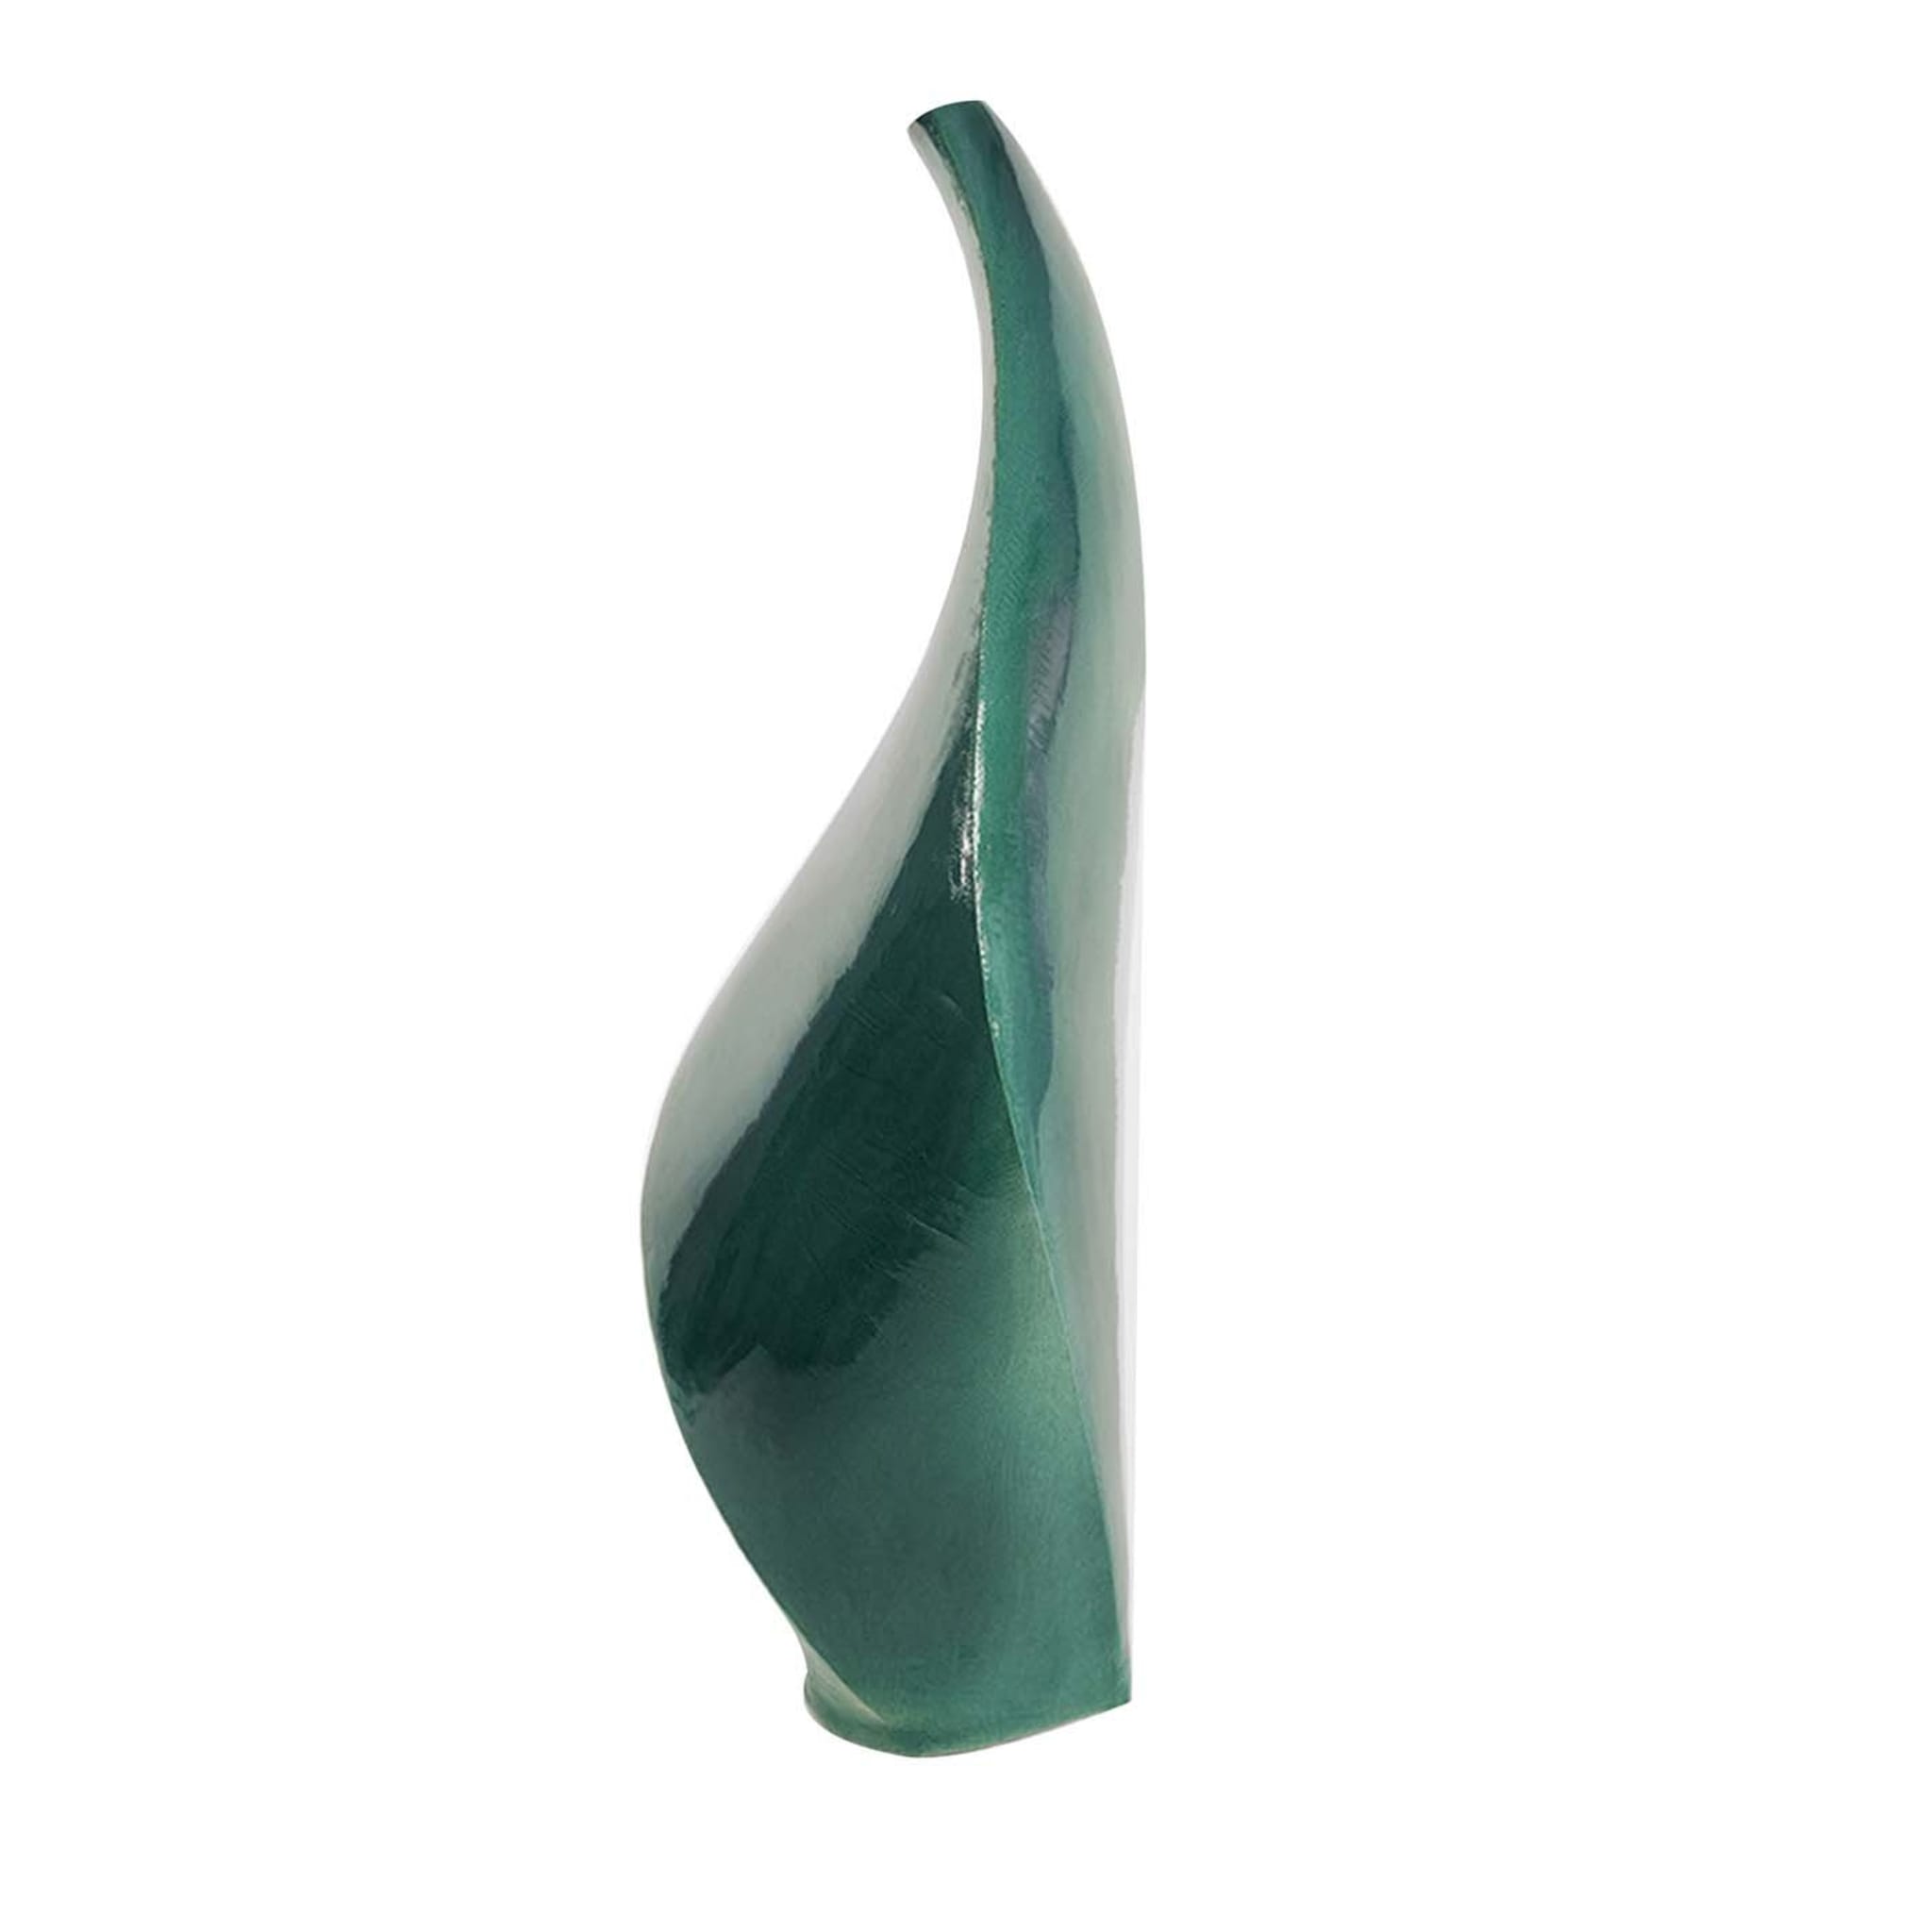 Vaso scultoreo verde con labbro curvo Demeter #1 - Vista principale